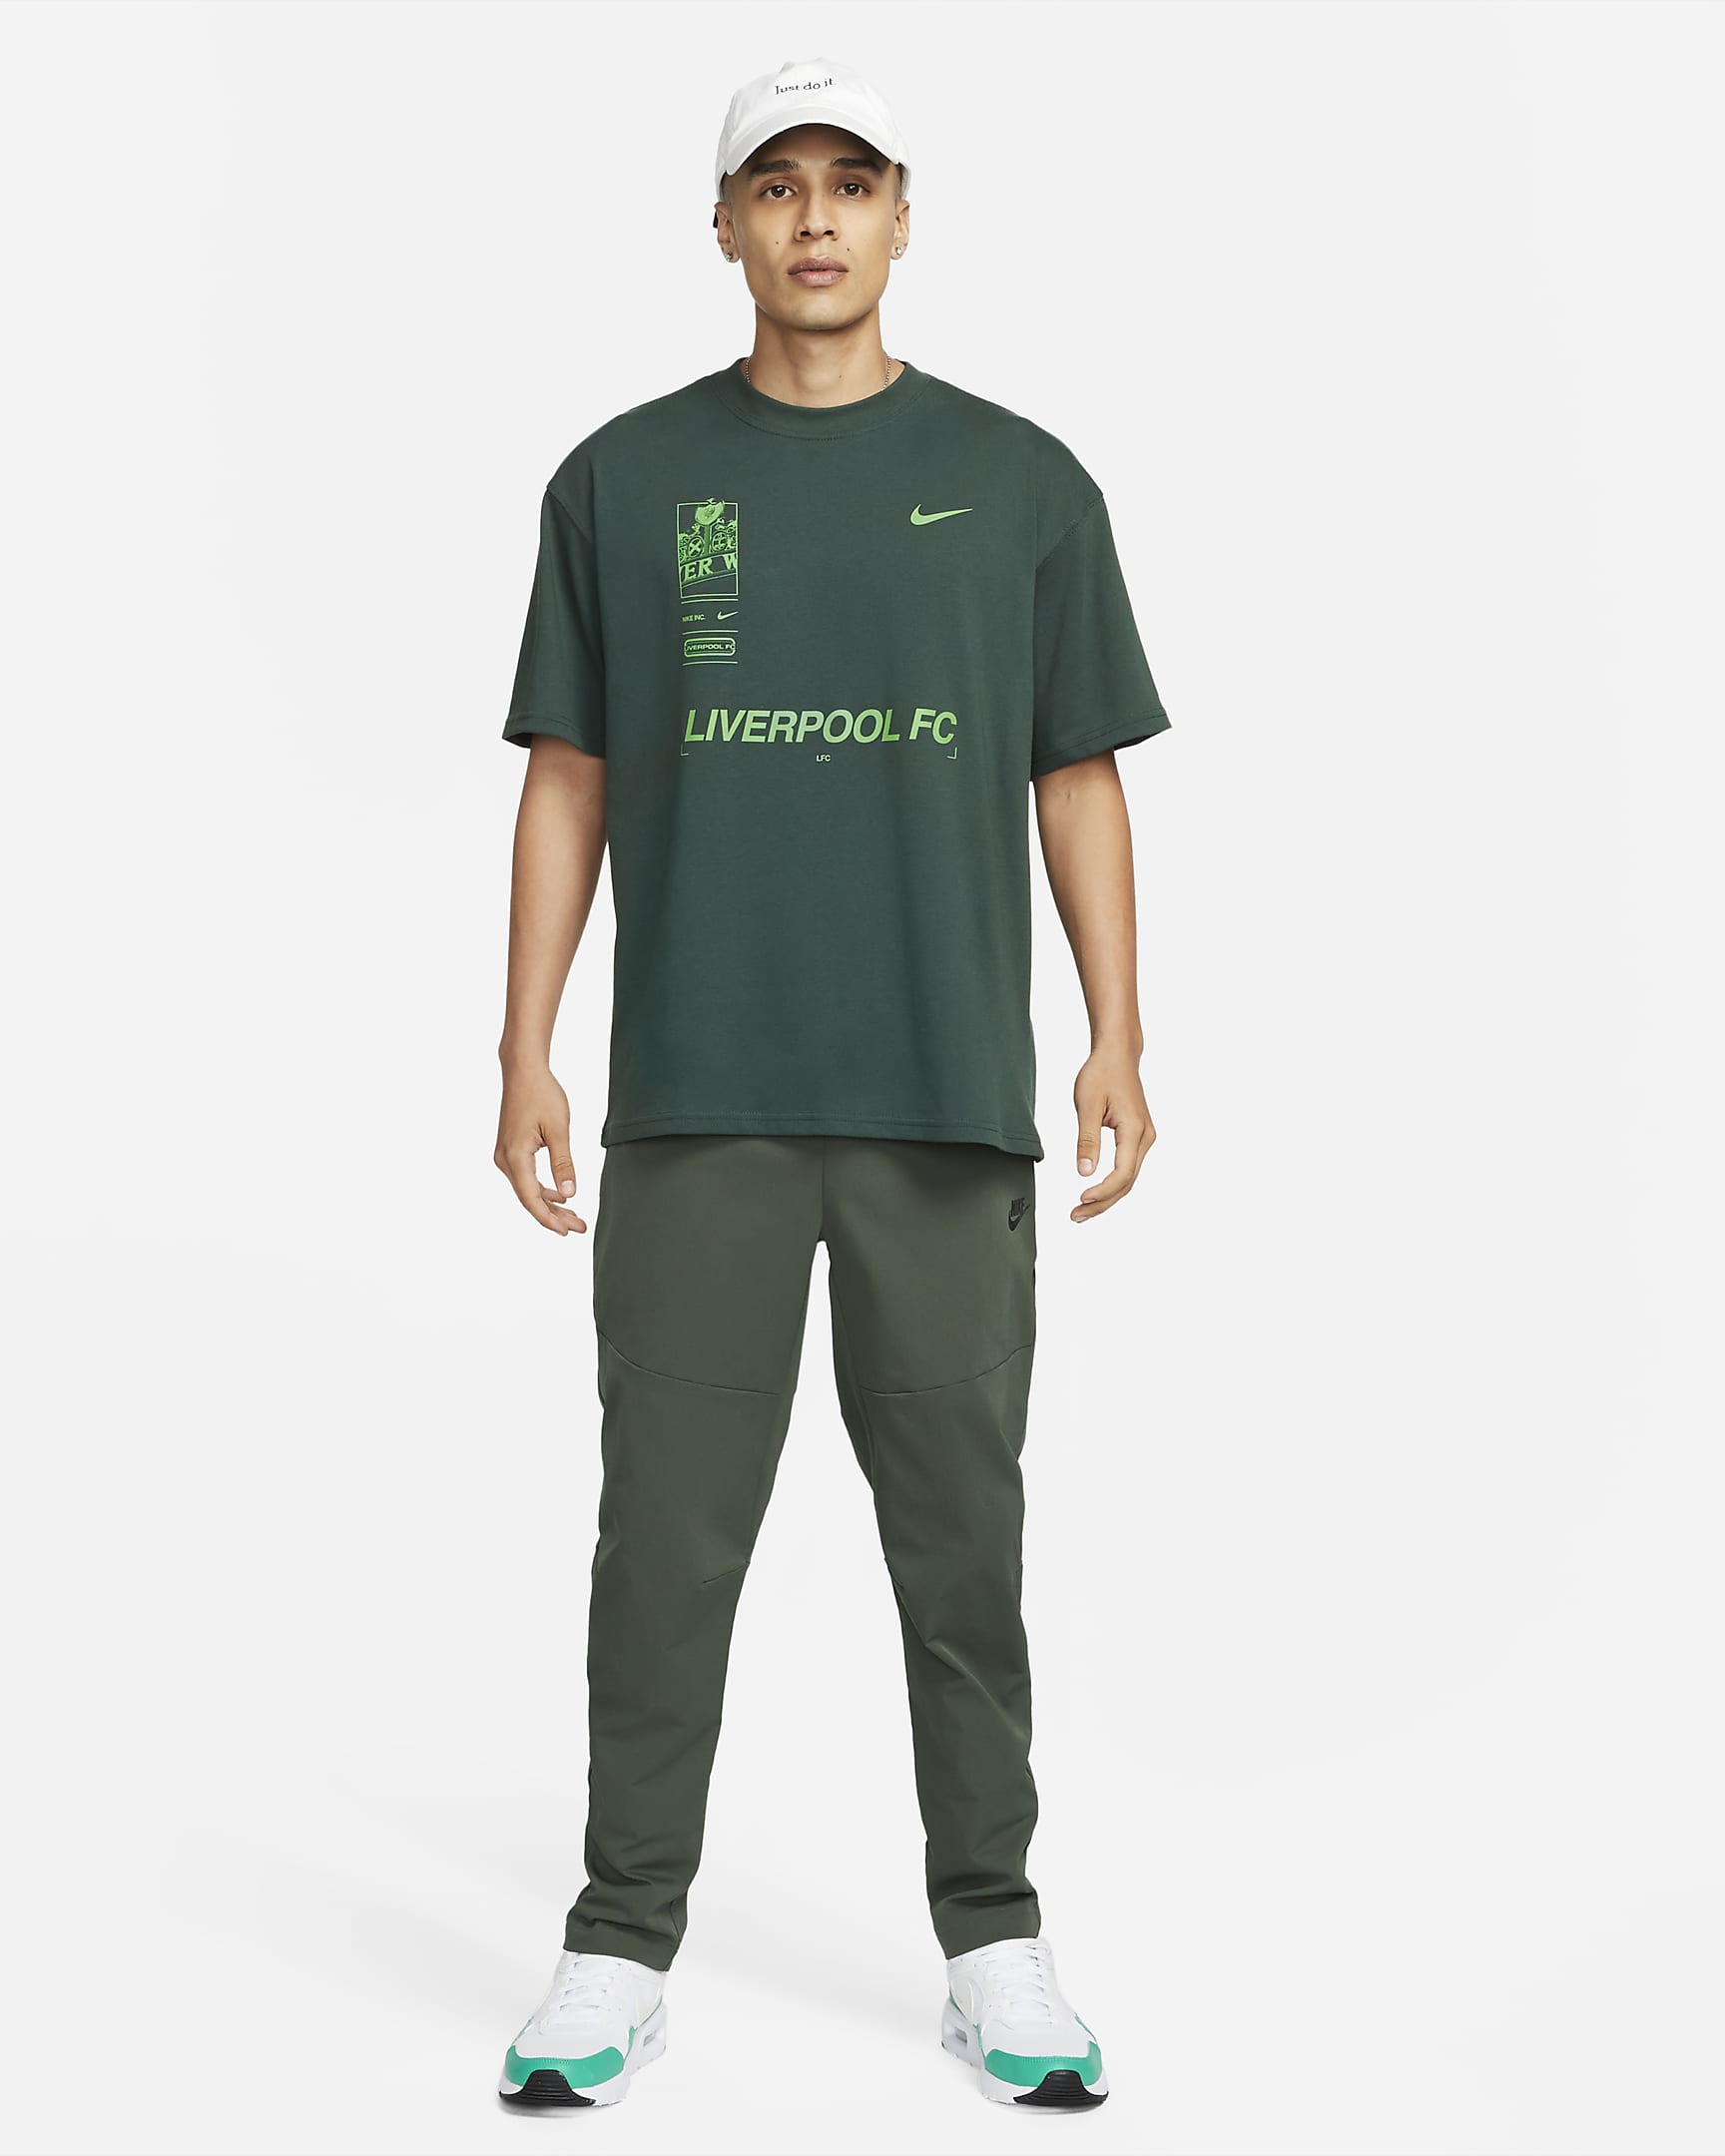 Liverpool F.C. Men's Nike Max90 Football T-Shirt. Nike HR